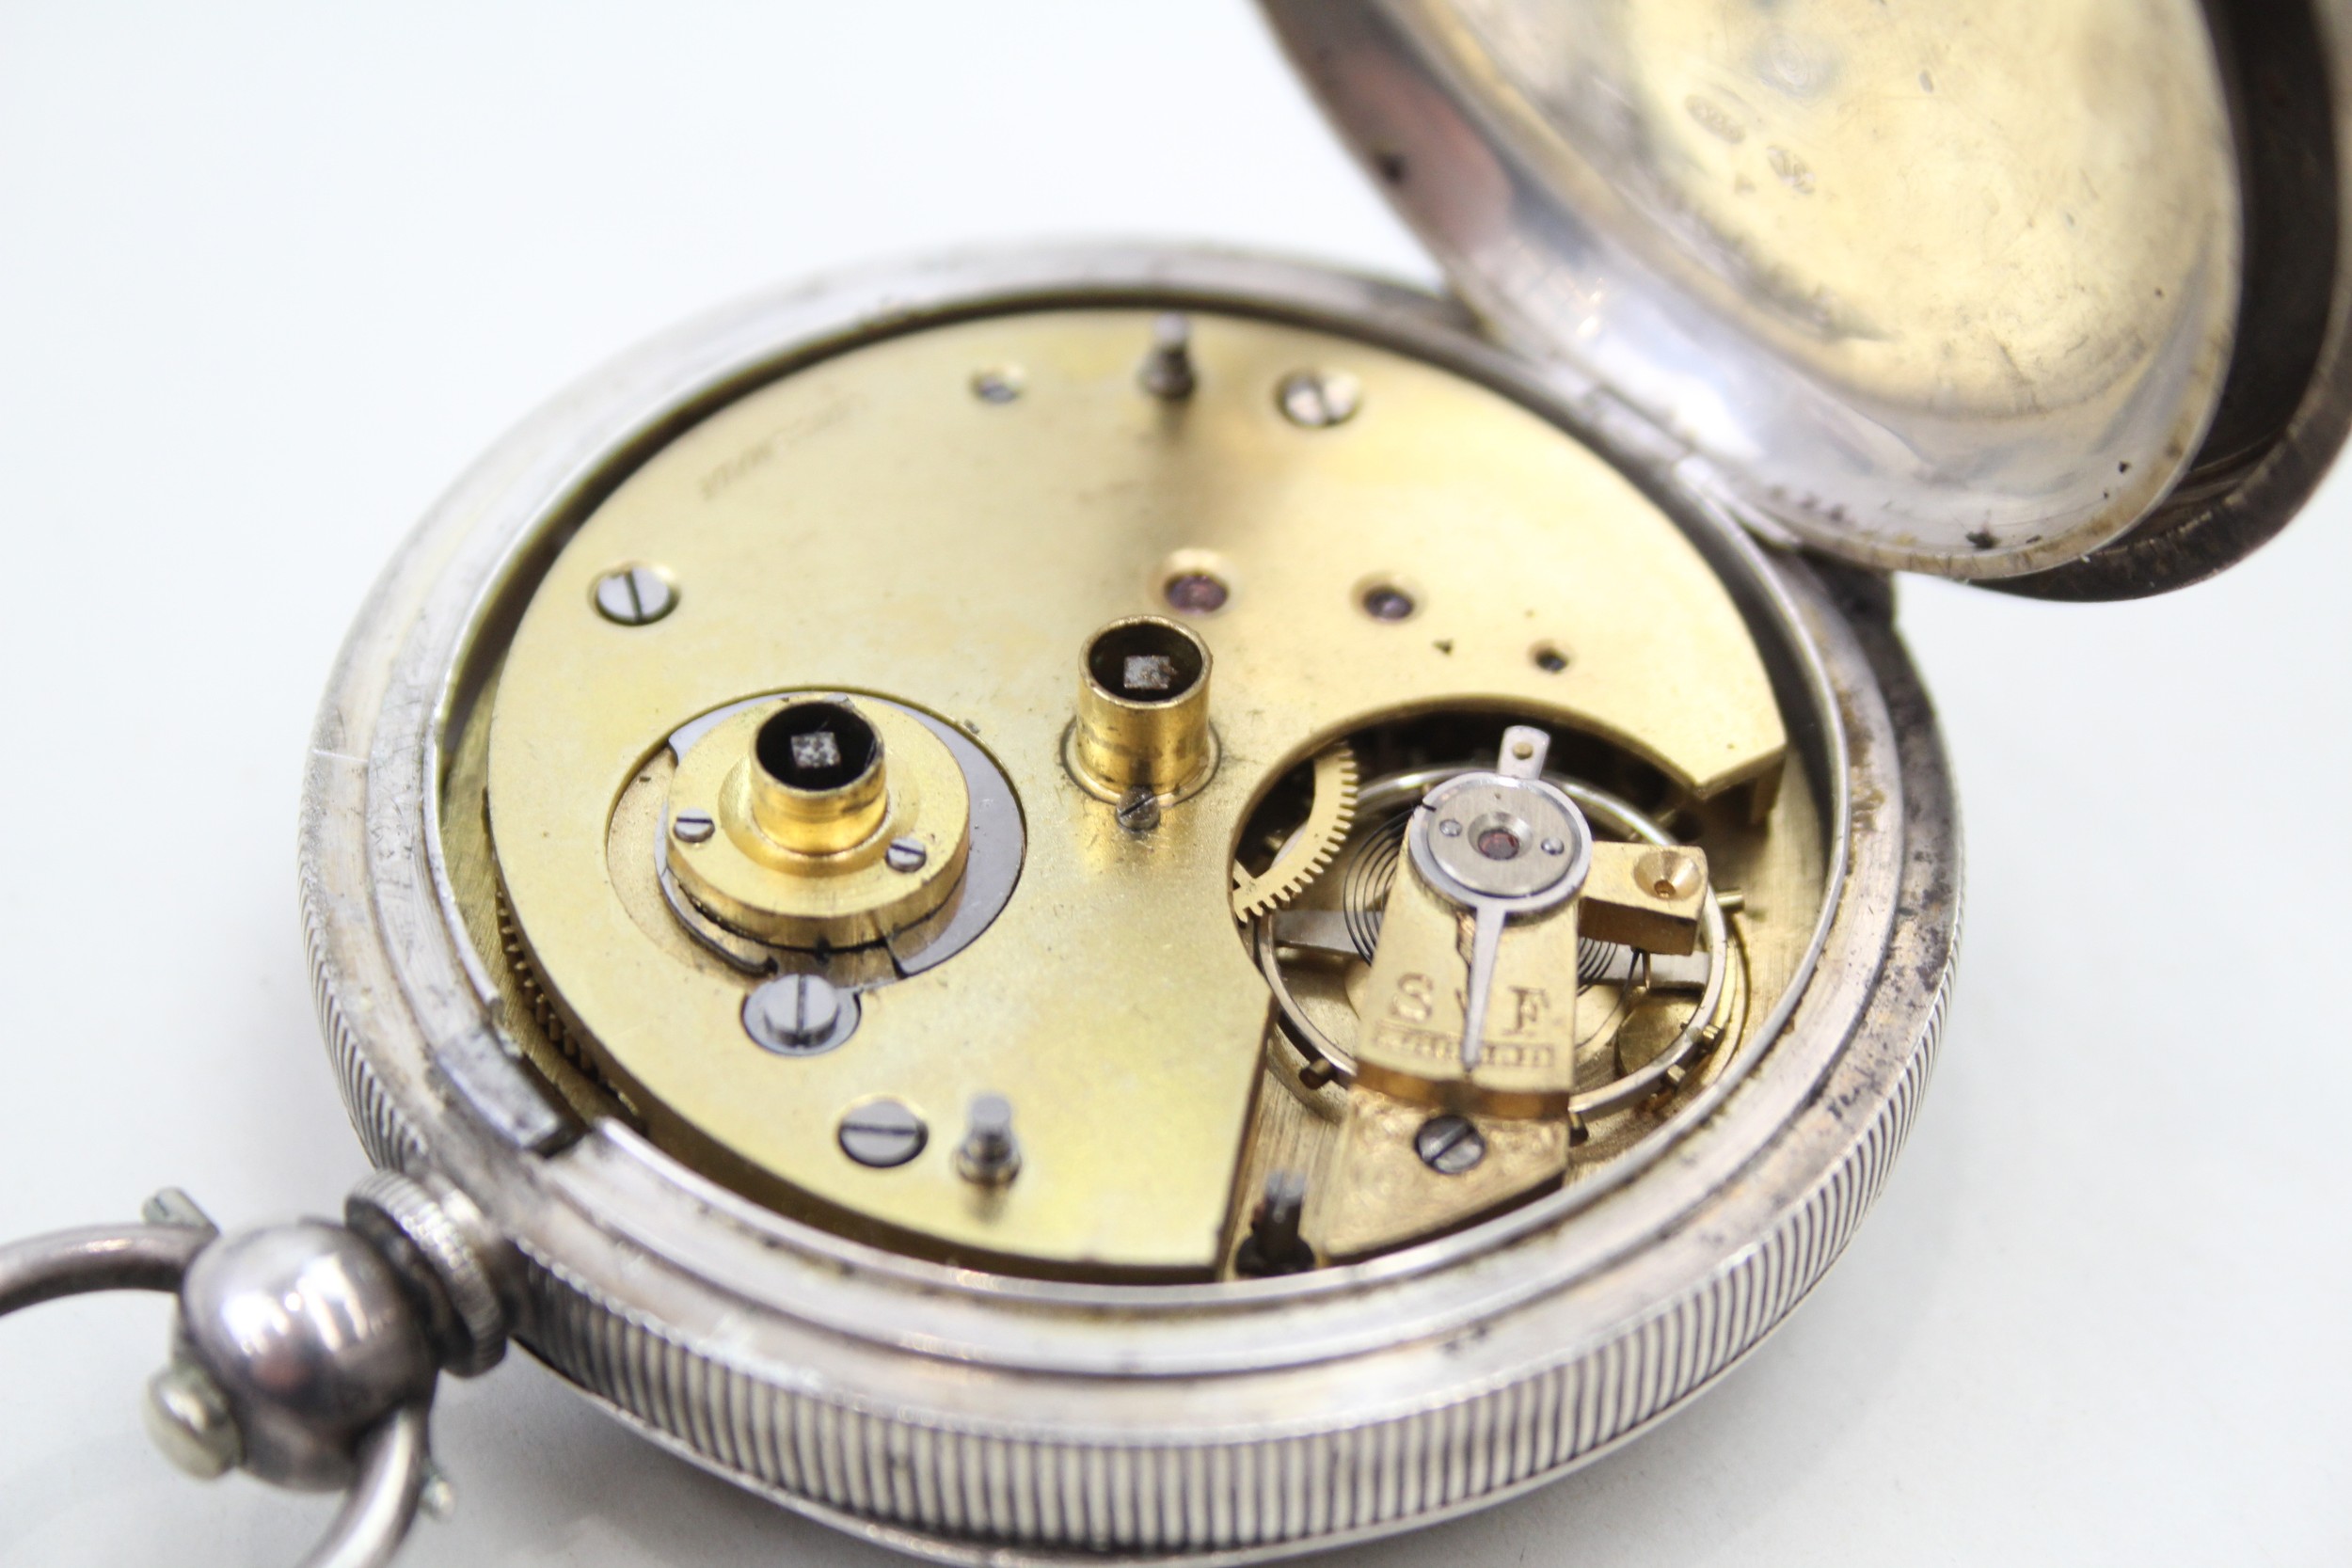 Sterling Silver Gents Vintage Open Face Pocket Watch Key-wind Working - Image 4 of 6